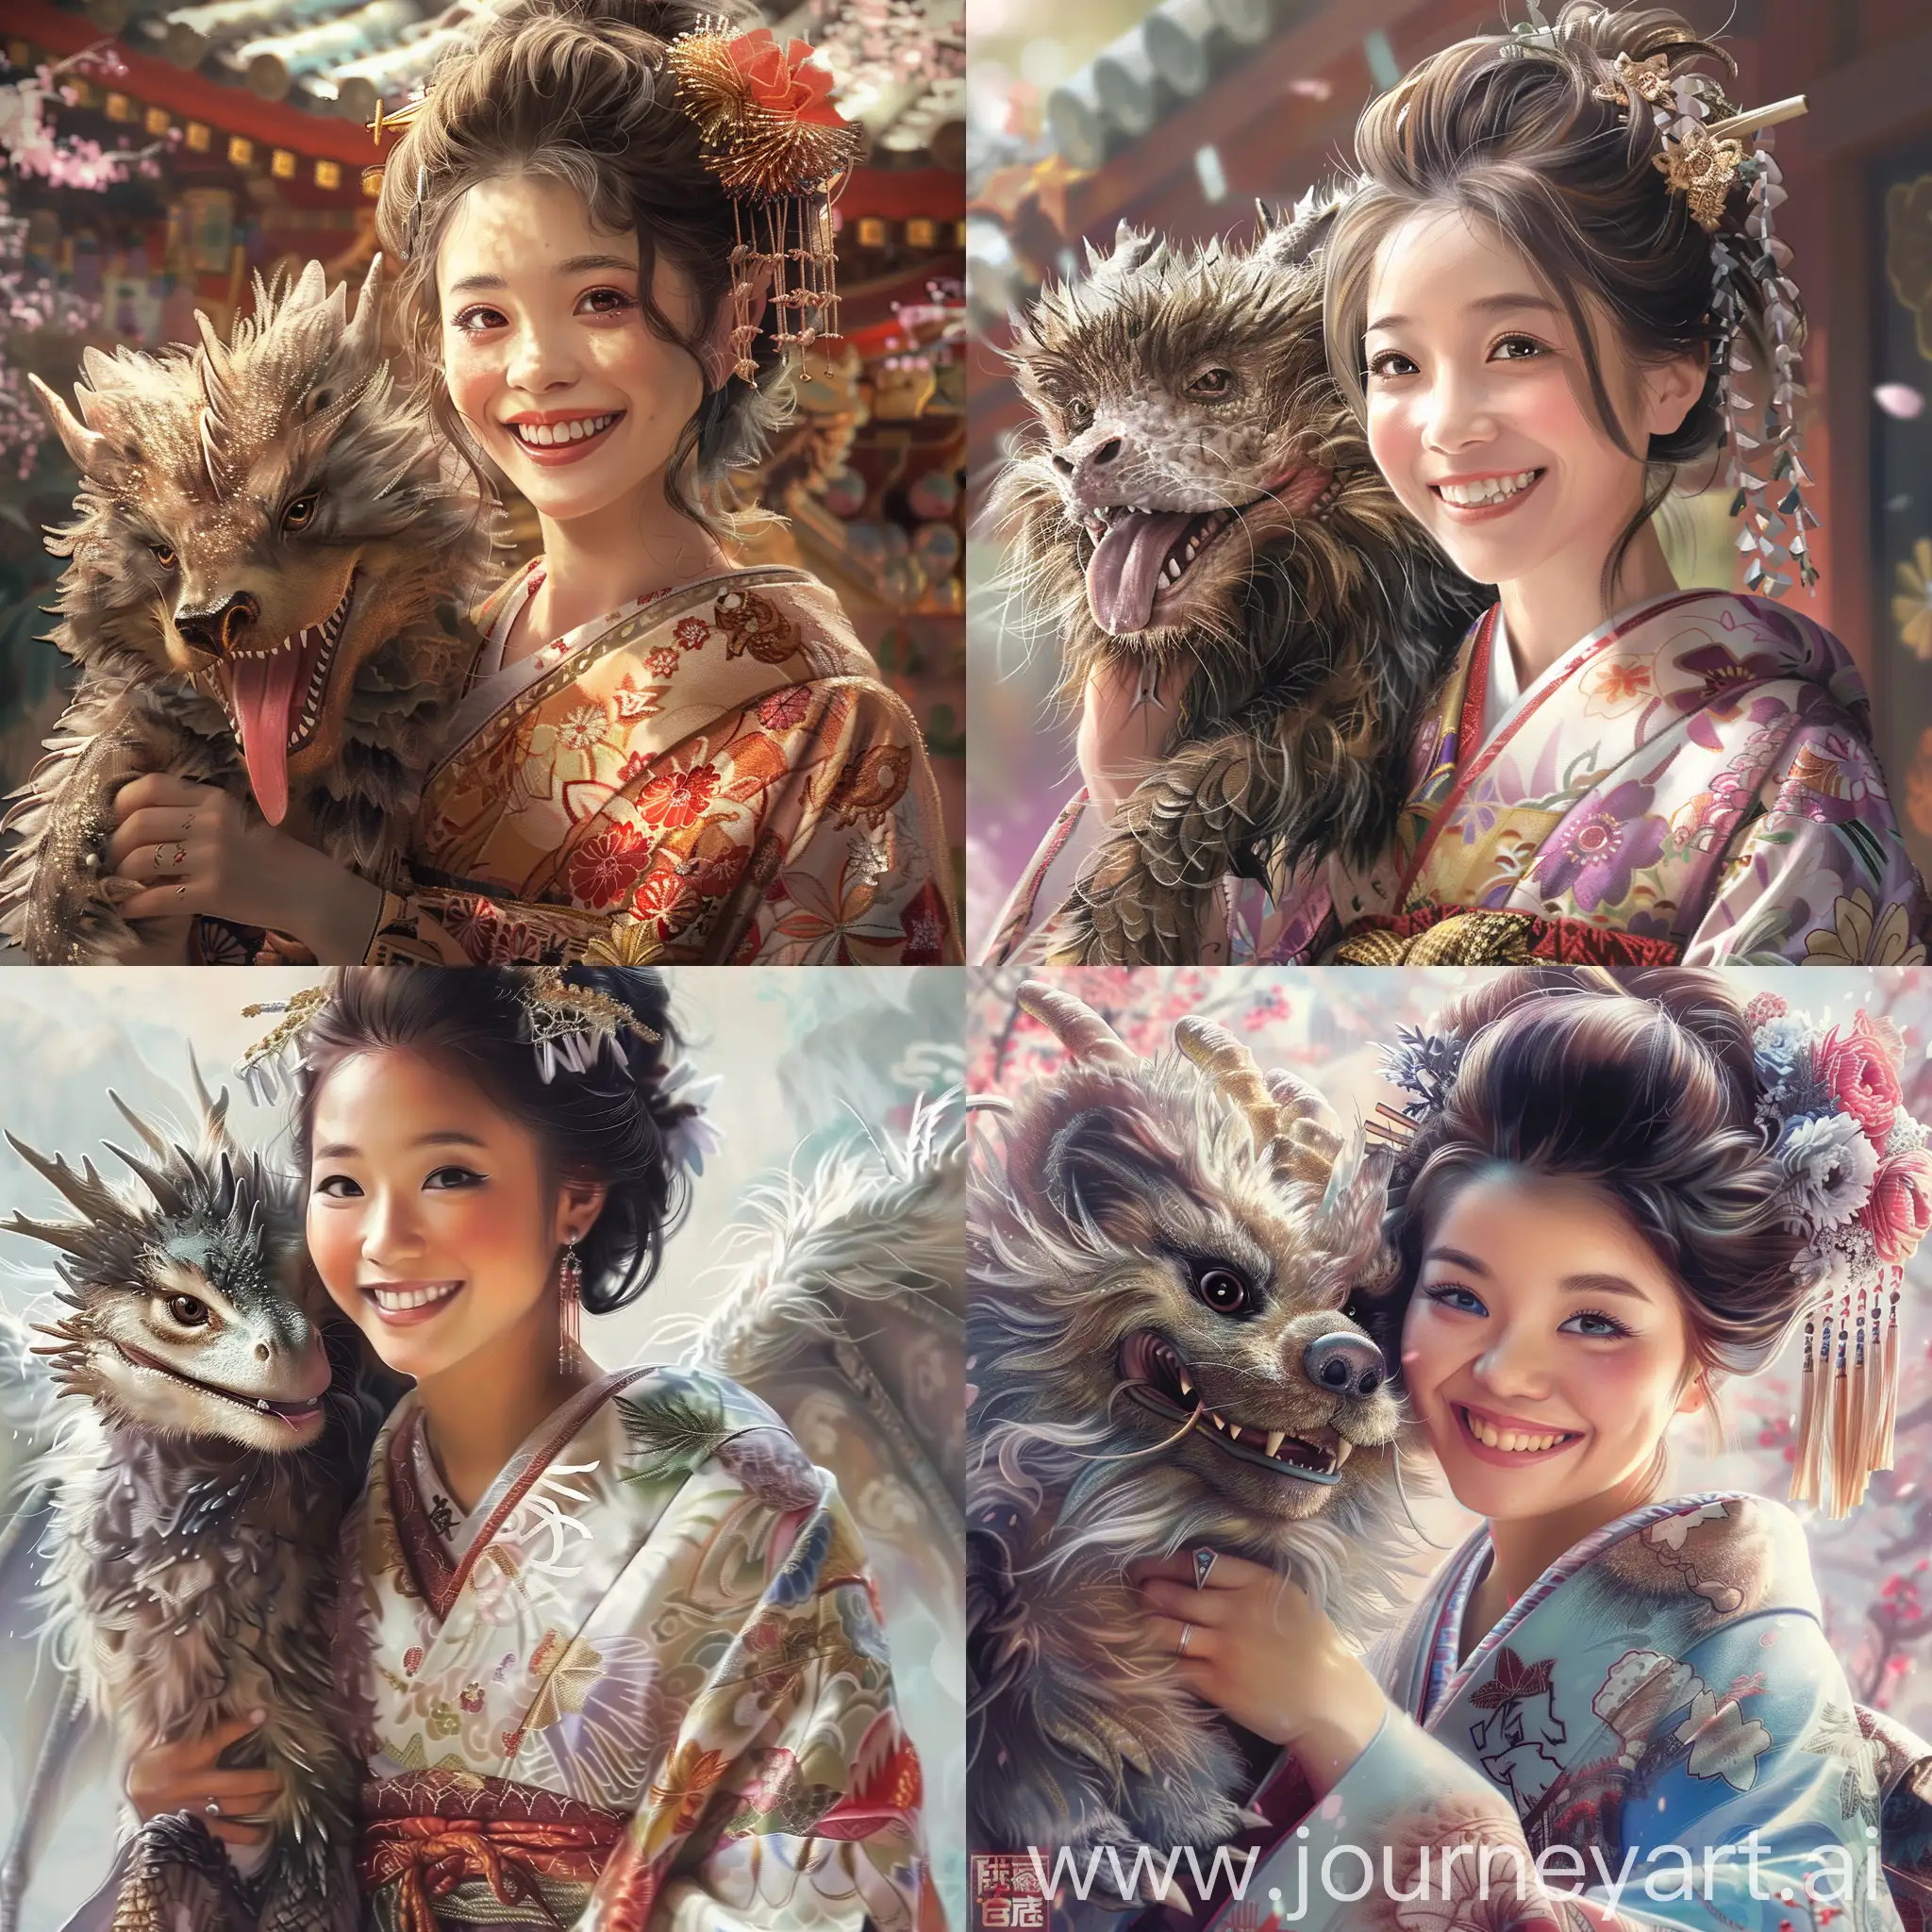 Enchanting-Japanese-Woman-in-Kimono-with-Smiling-Dragon-Companion